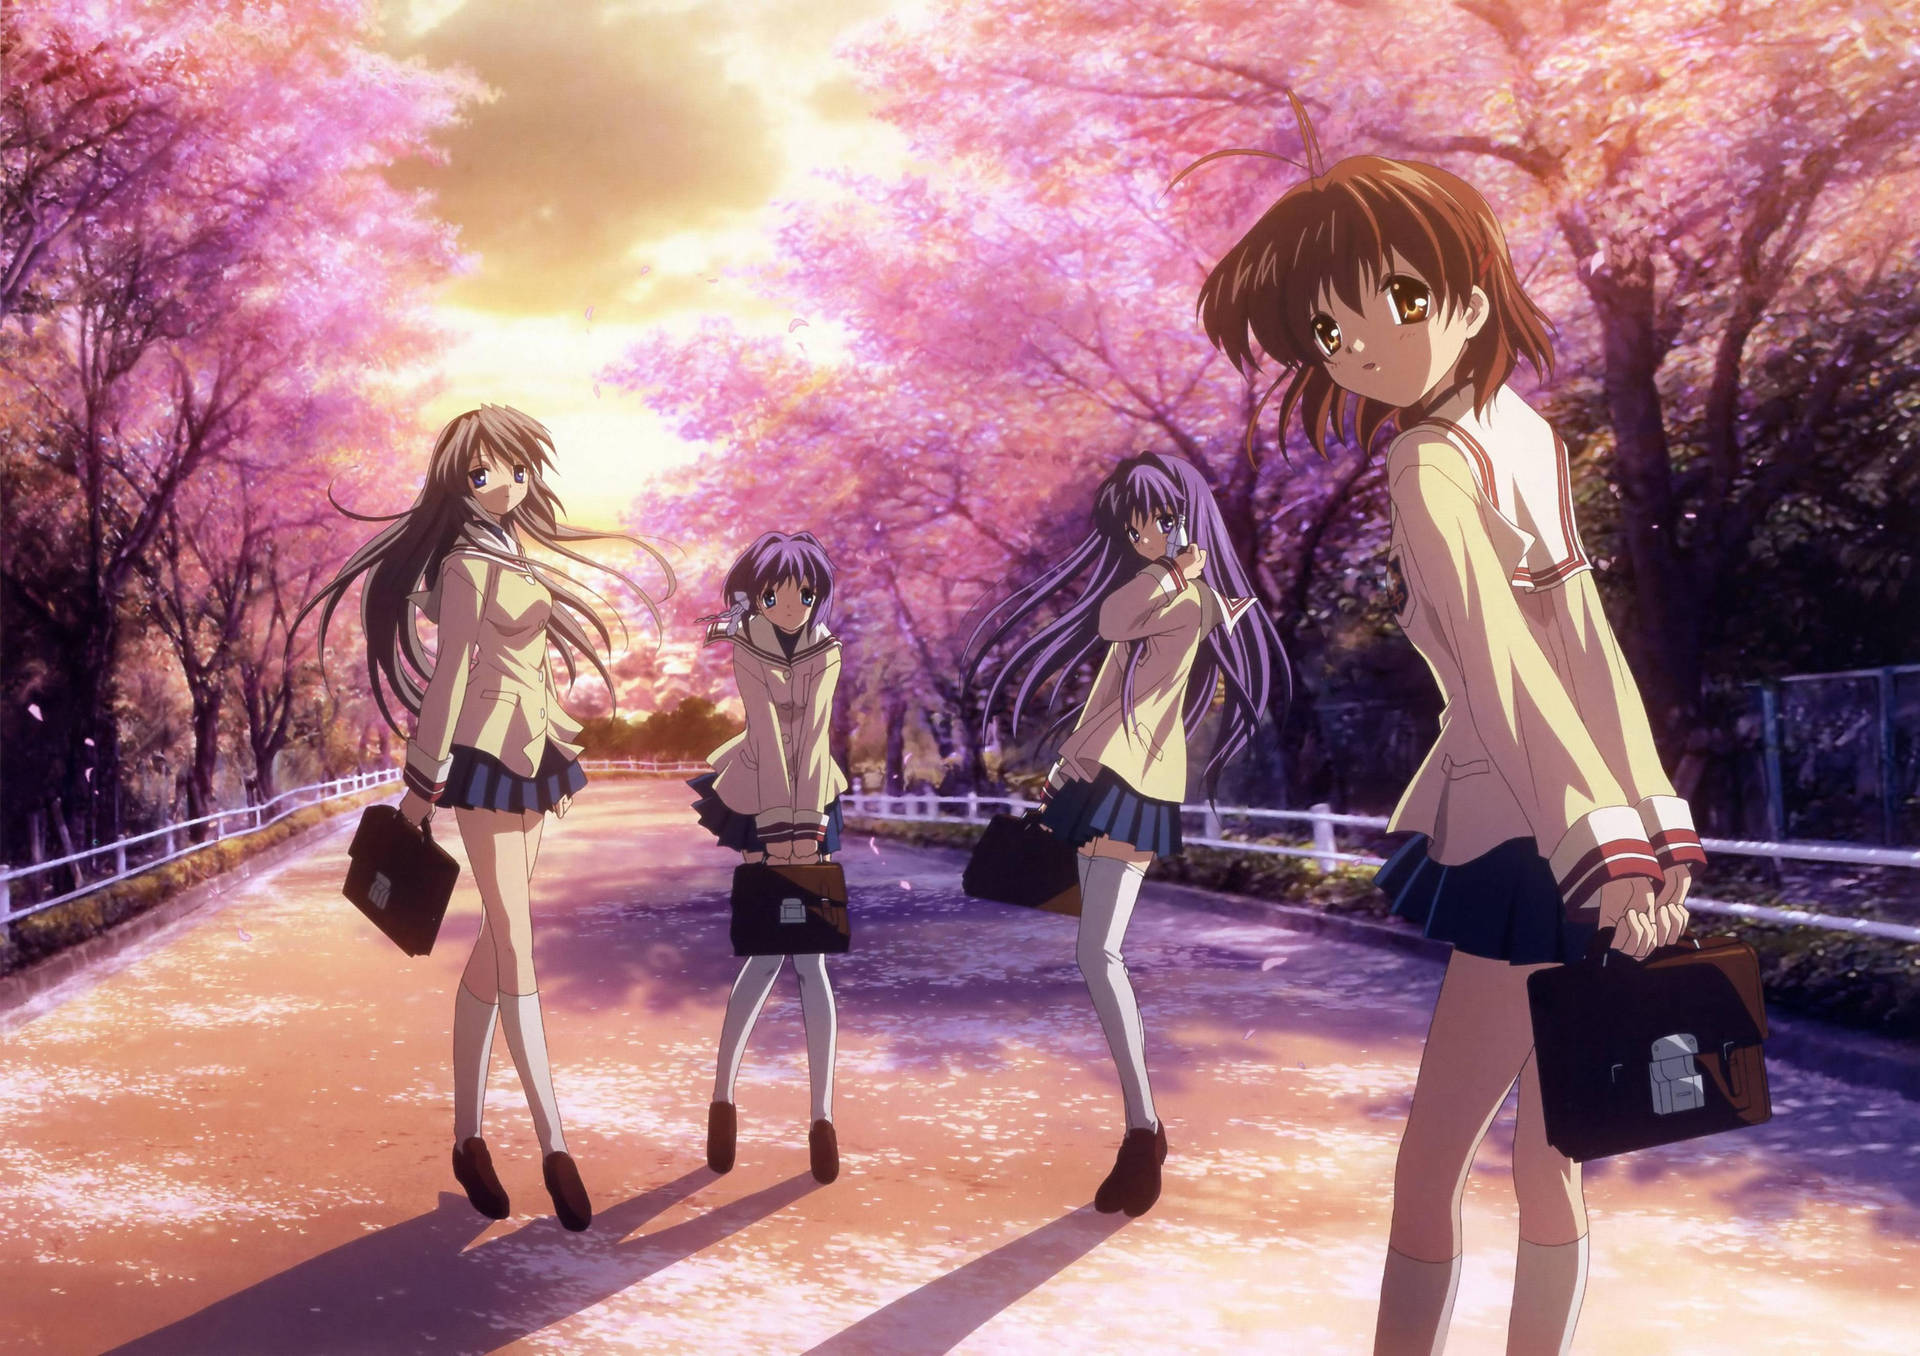 Top Anime Clannad Girls Wallpaper